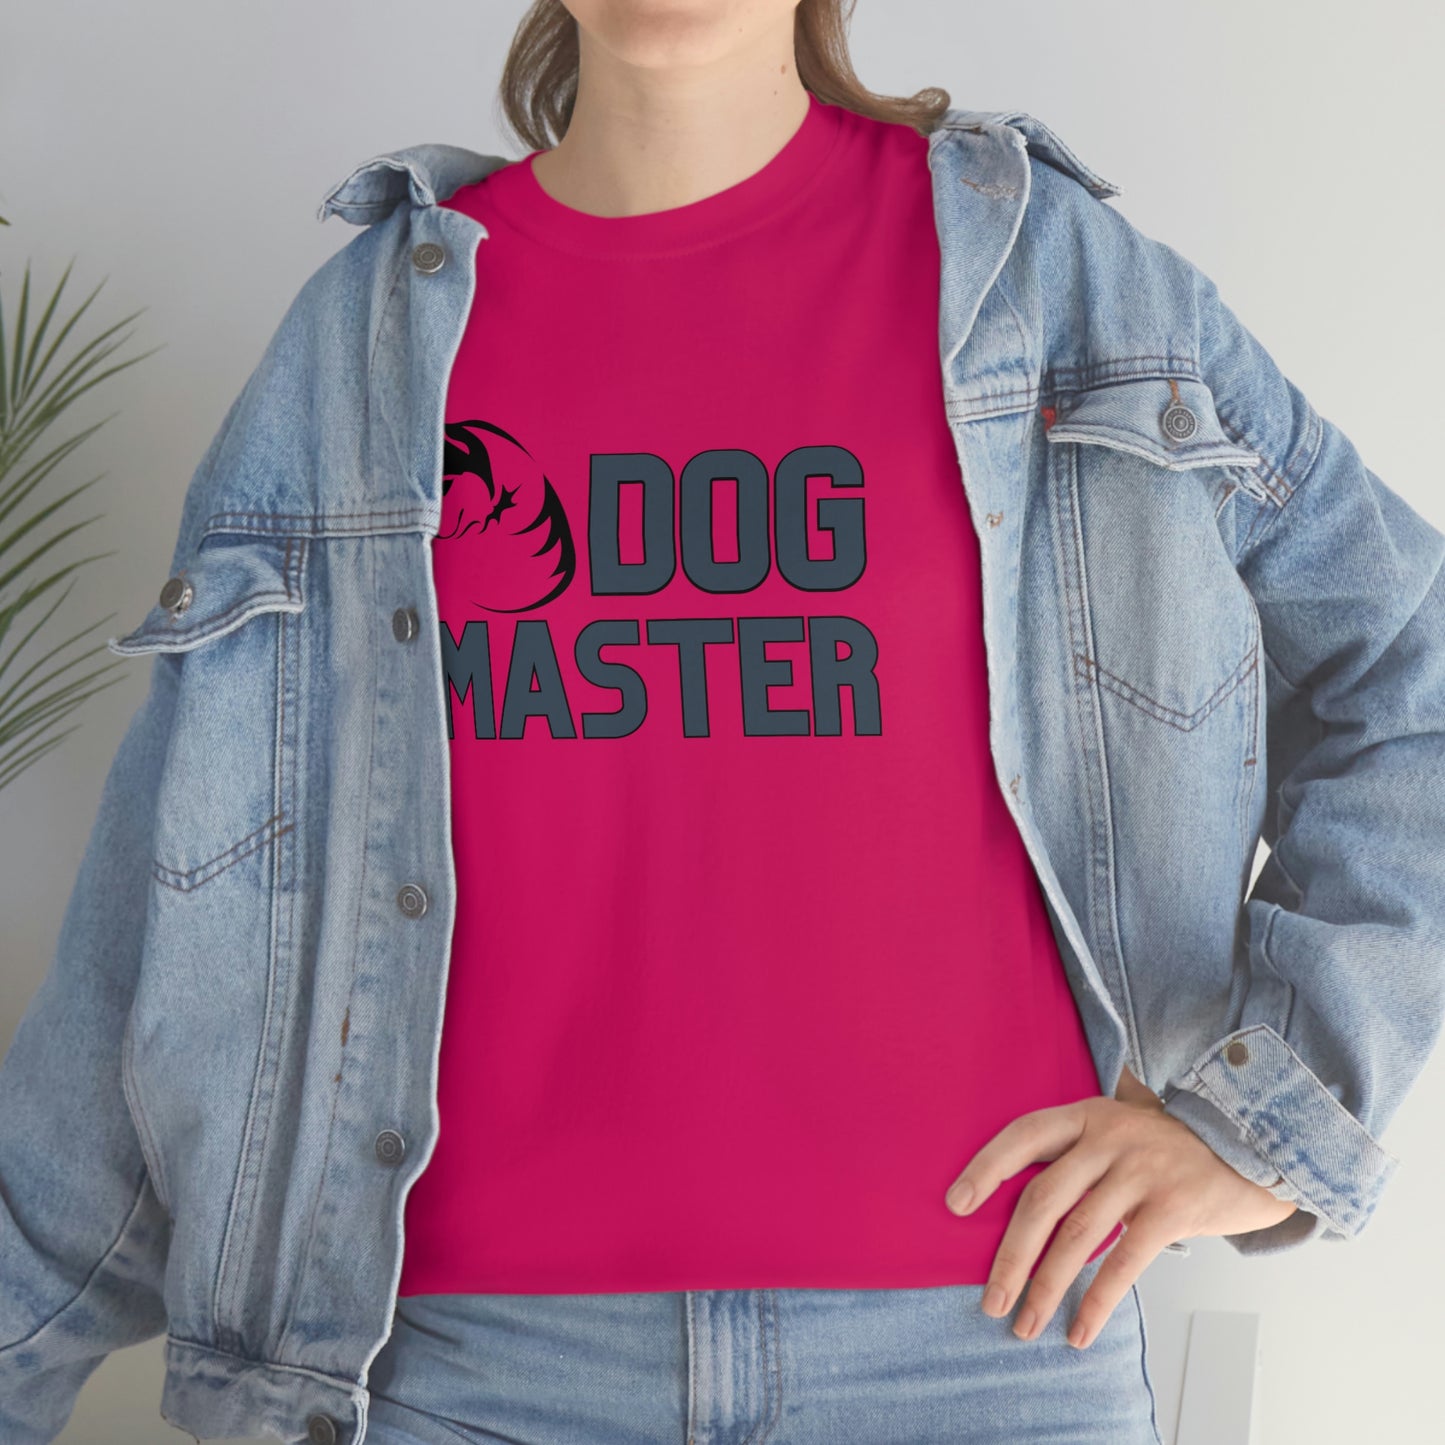 Dog Master with Dog logo design Graphic tee shirt